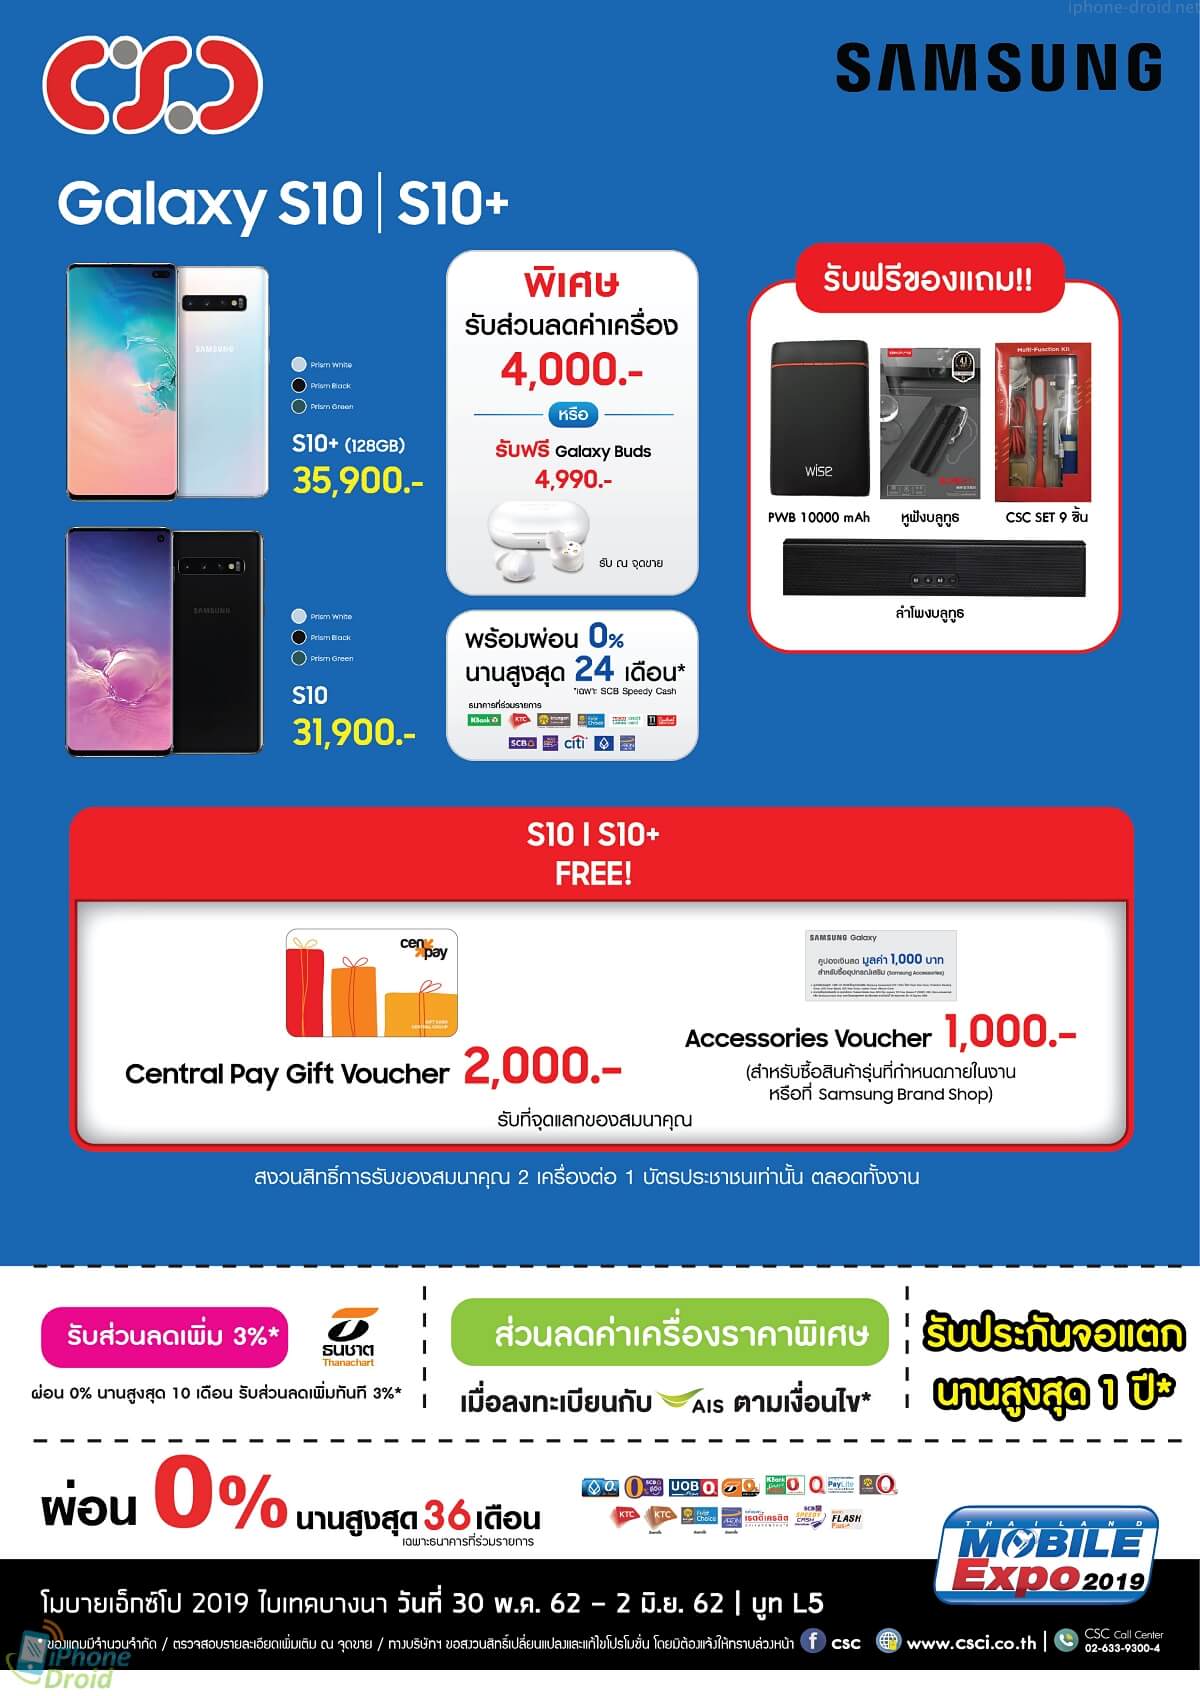 CSC Promotion Thailand Mobile Expo 2019